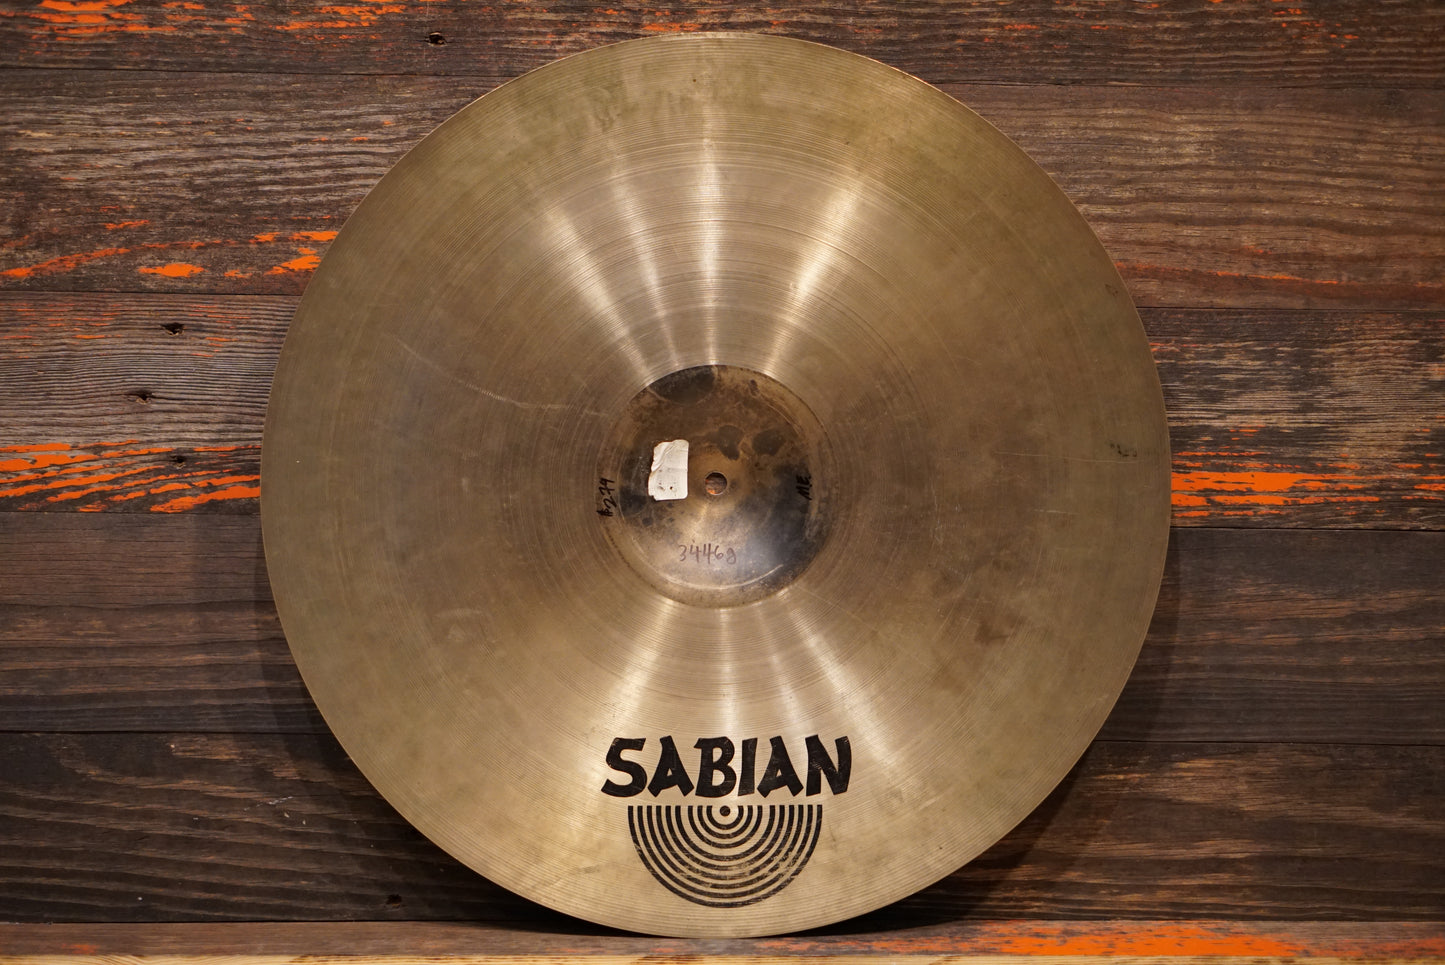 Sabian 21" AAX Raw Bell Dry Ride Cymbal - 3446g